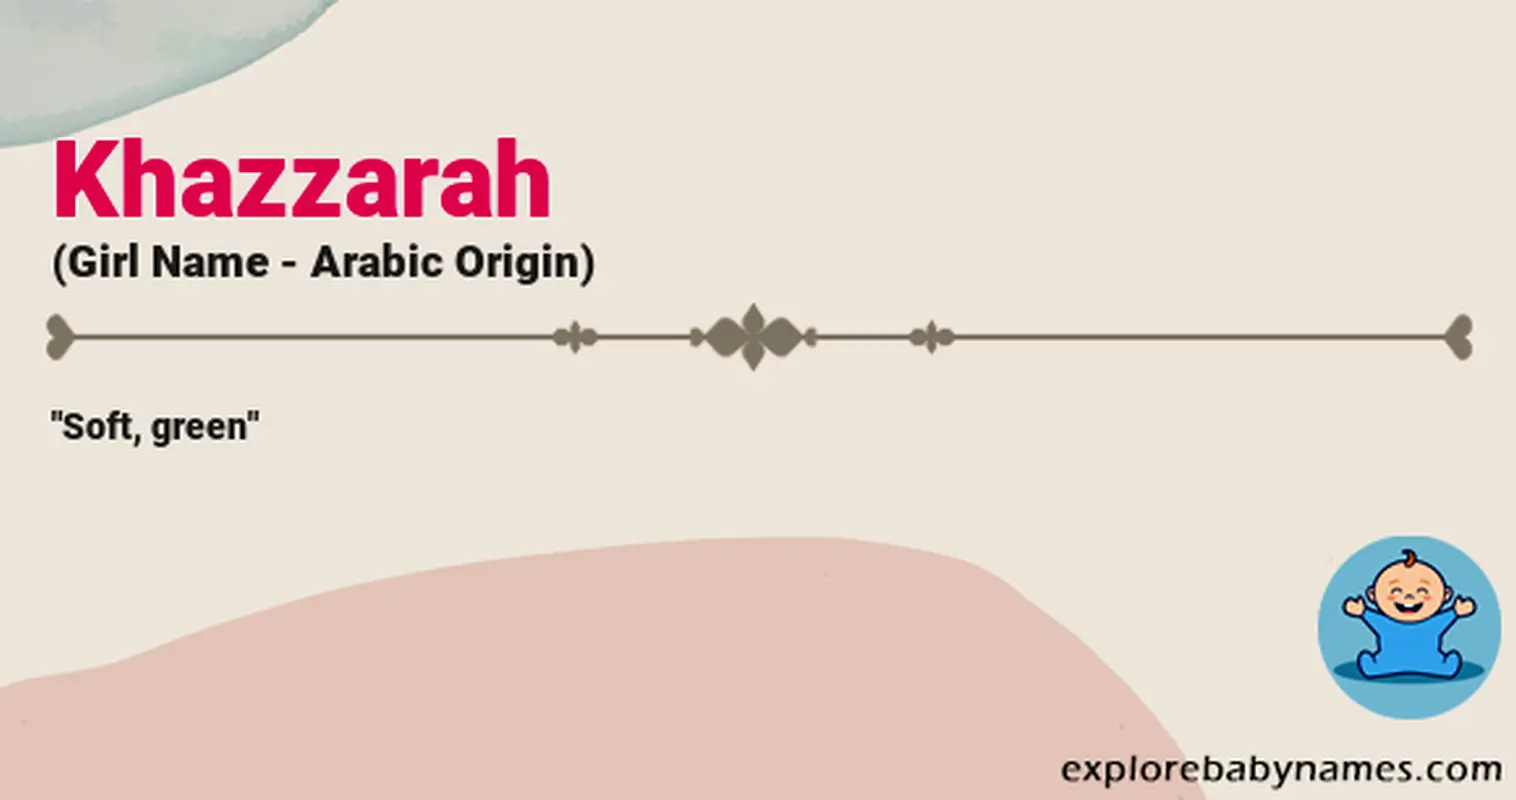 Meaning of Khazzarah